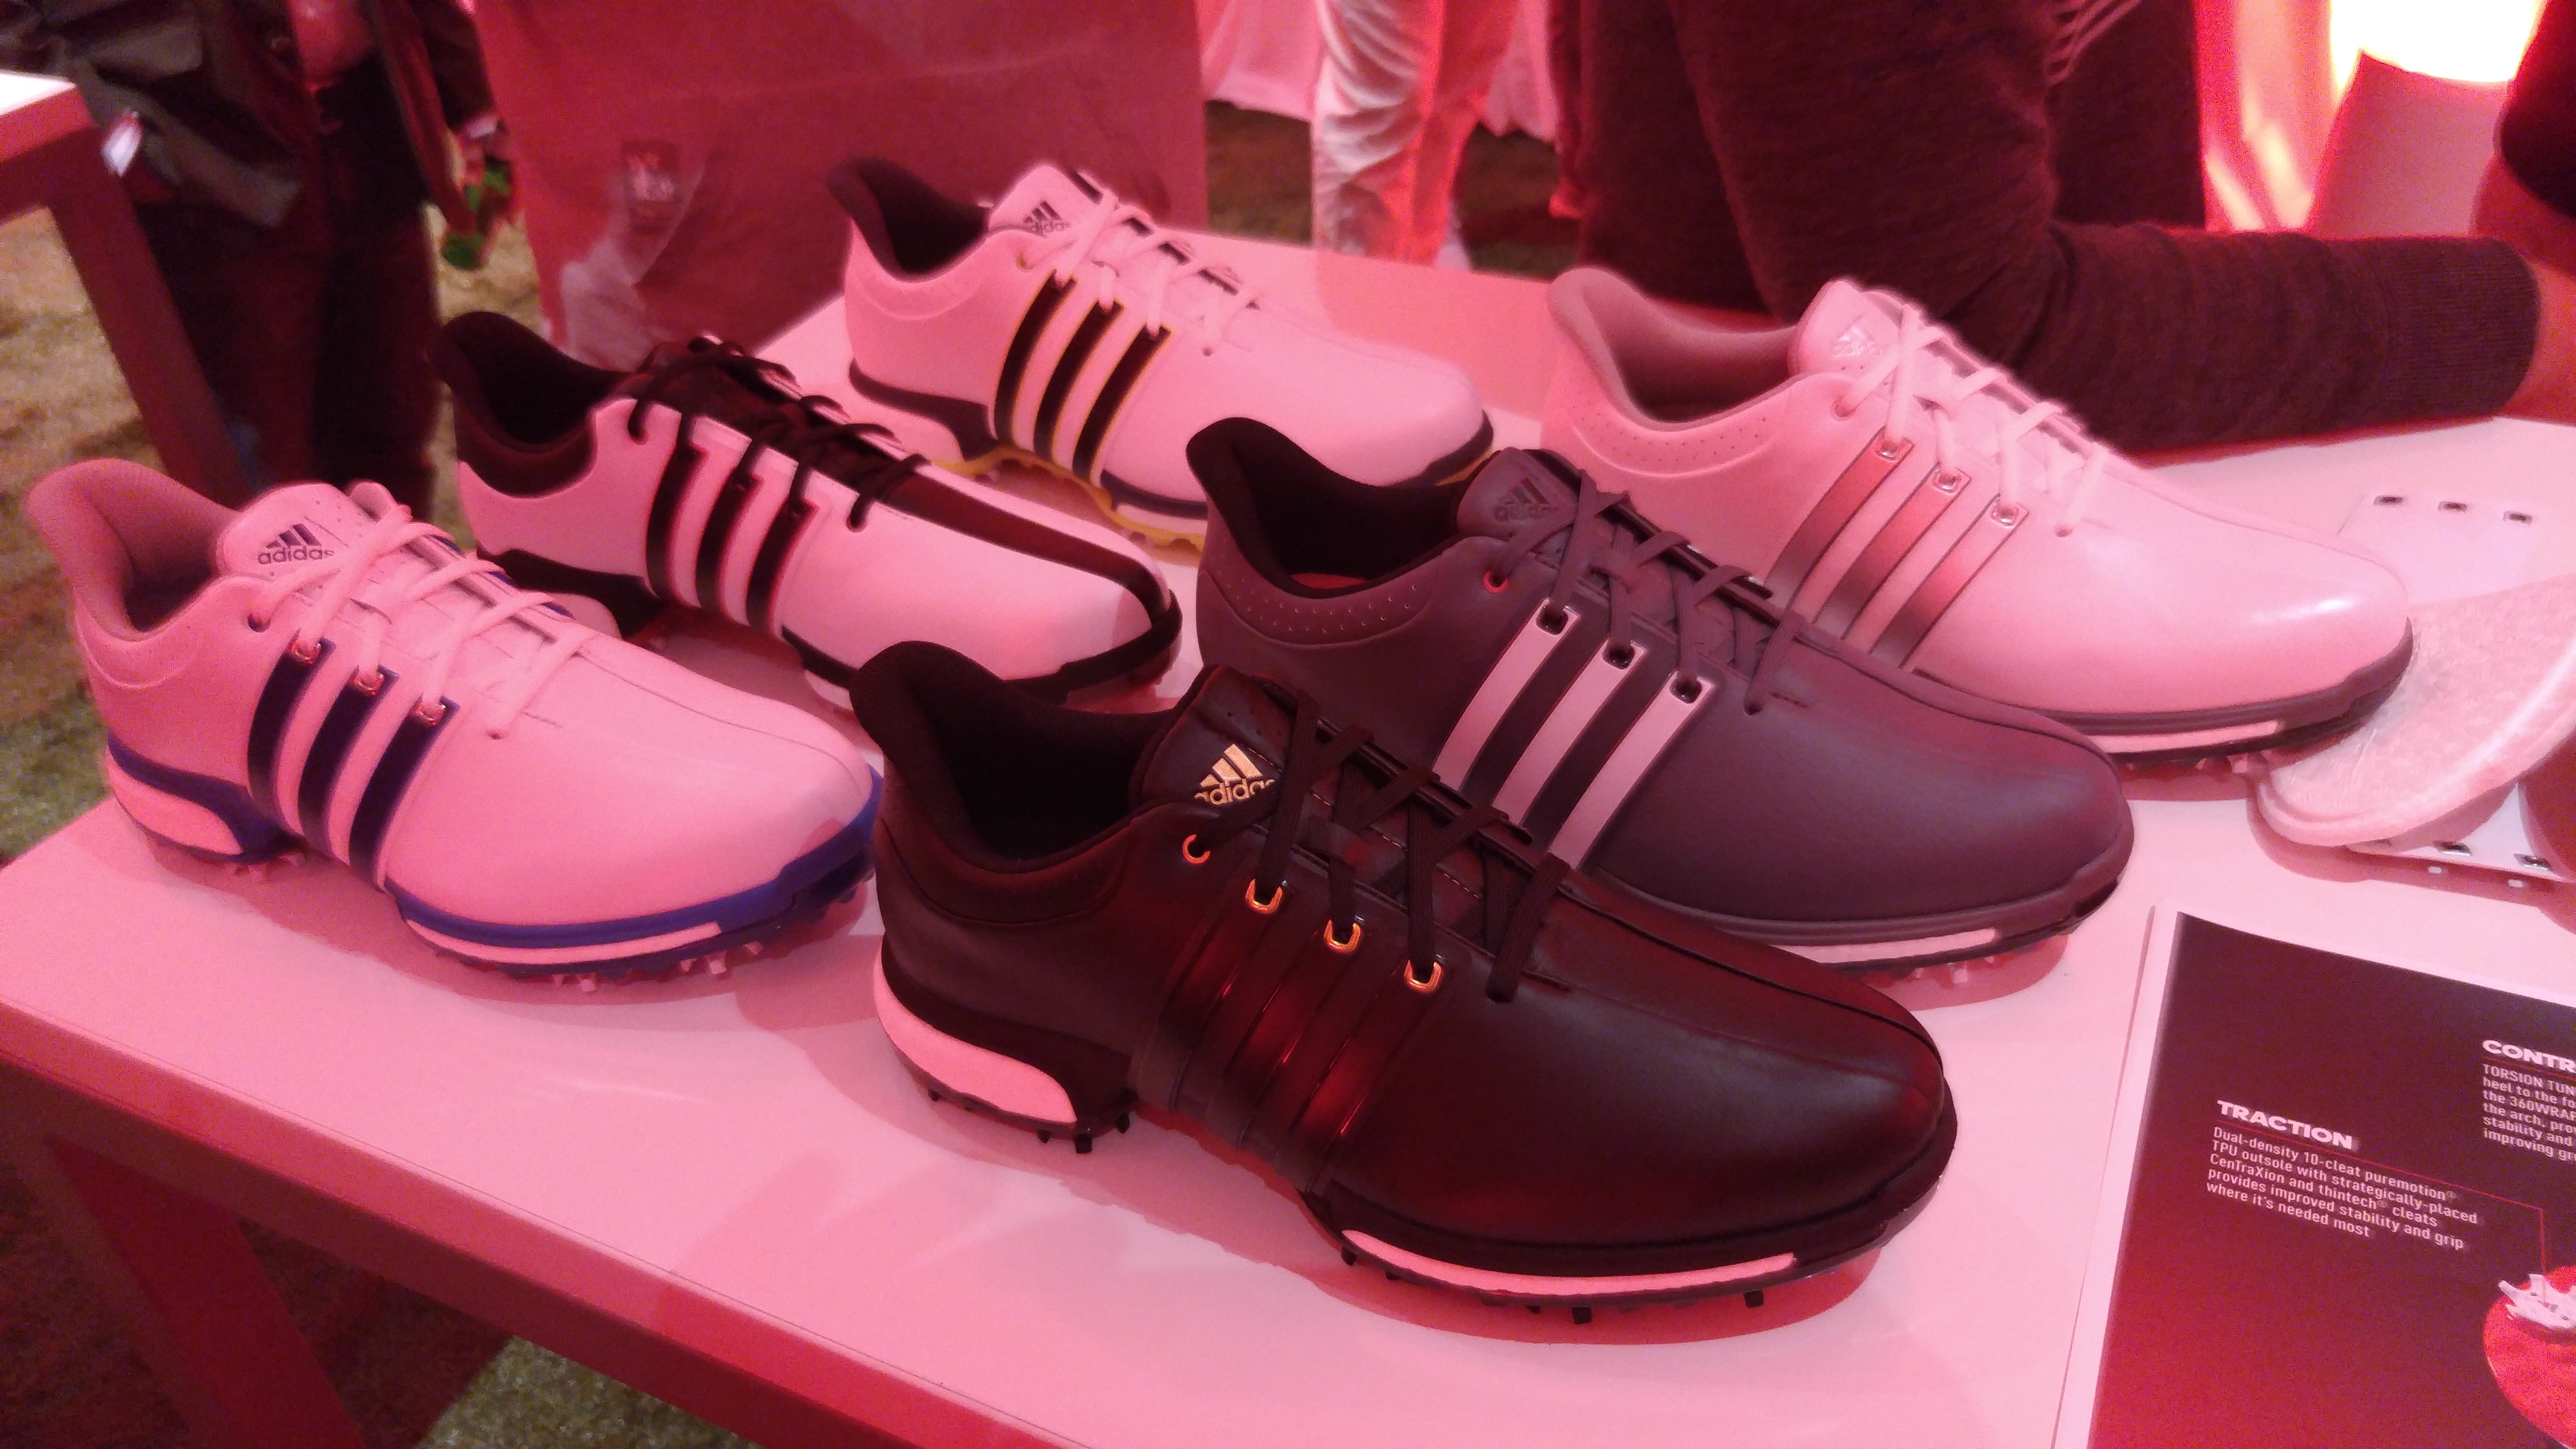 REVIEW: adidas Golf Tour360 golf shoes